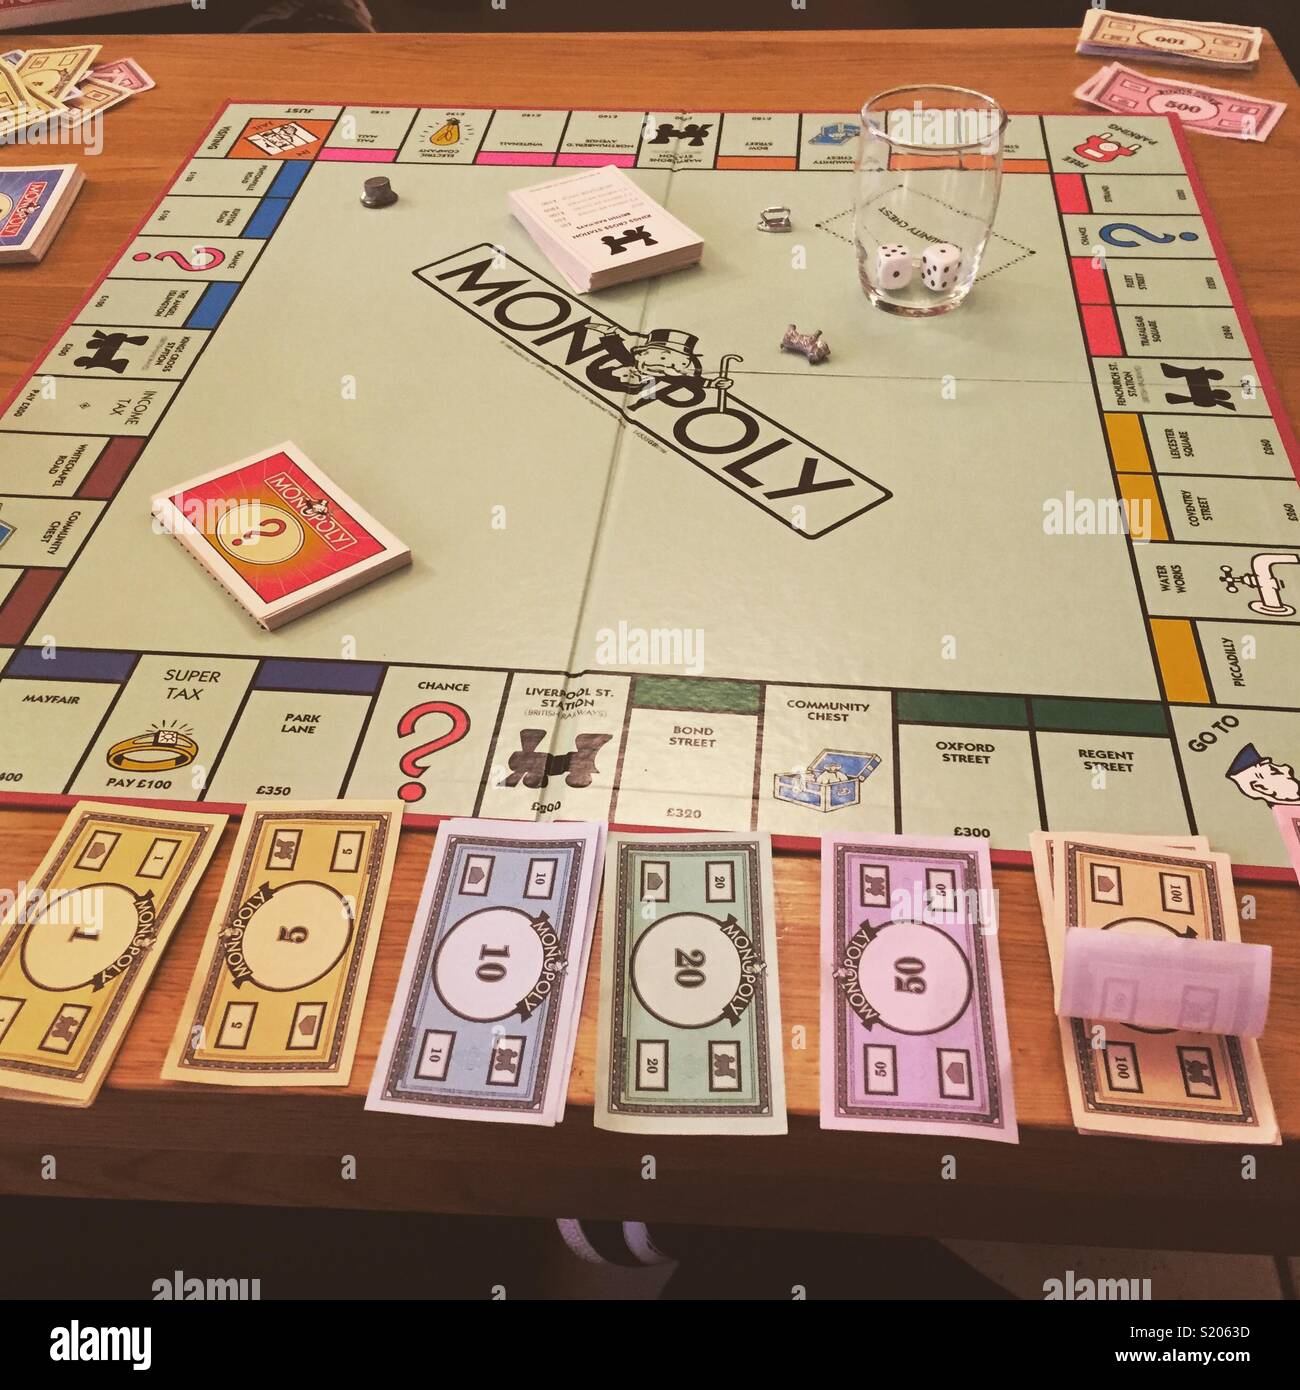 Monopoly game in progress Stock Photo